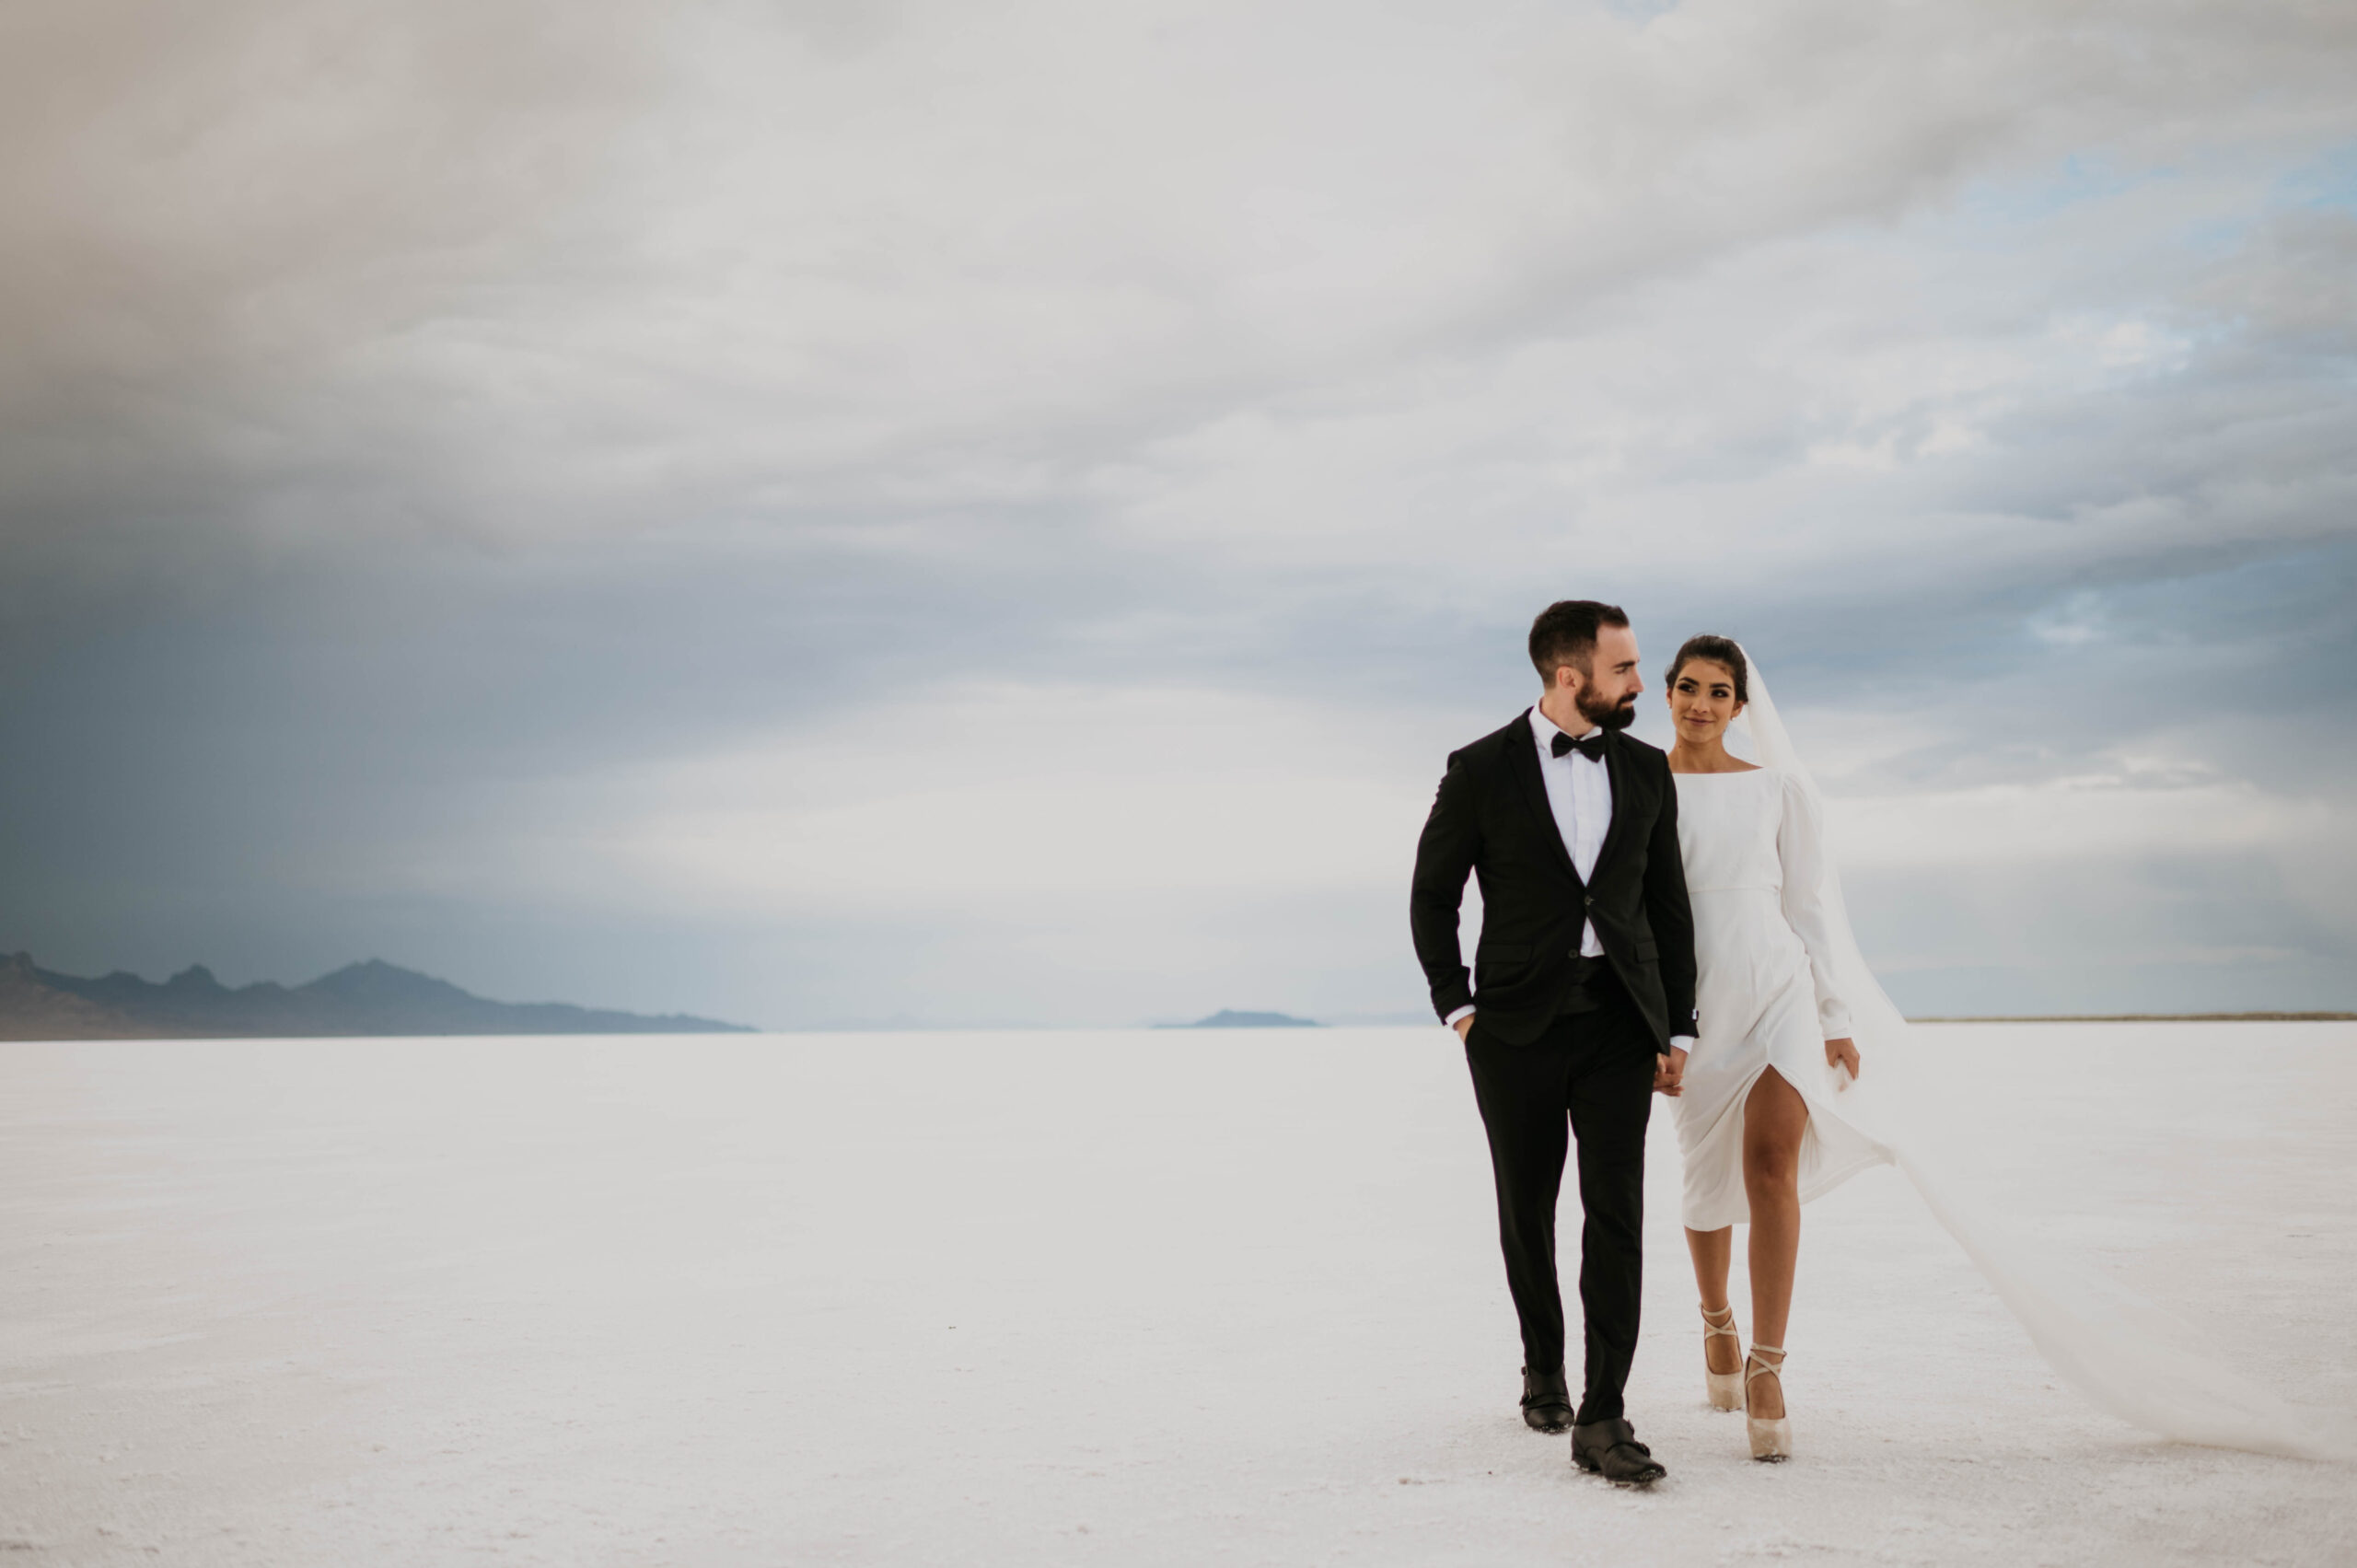 A newly married couple walks across the Salt Flats in Utah